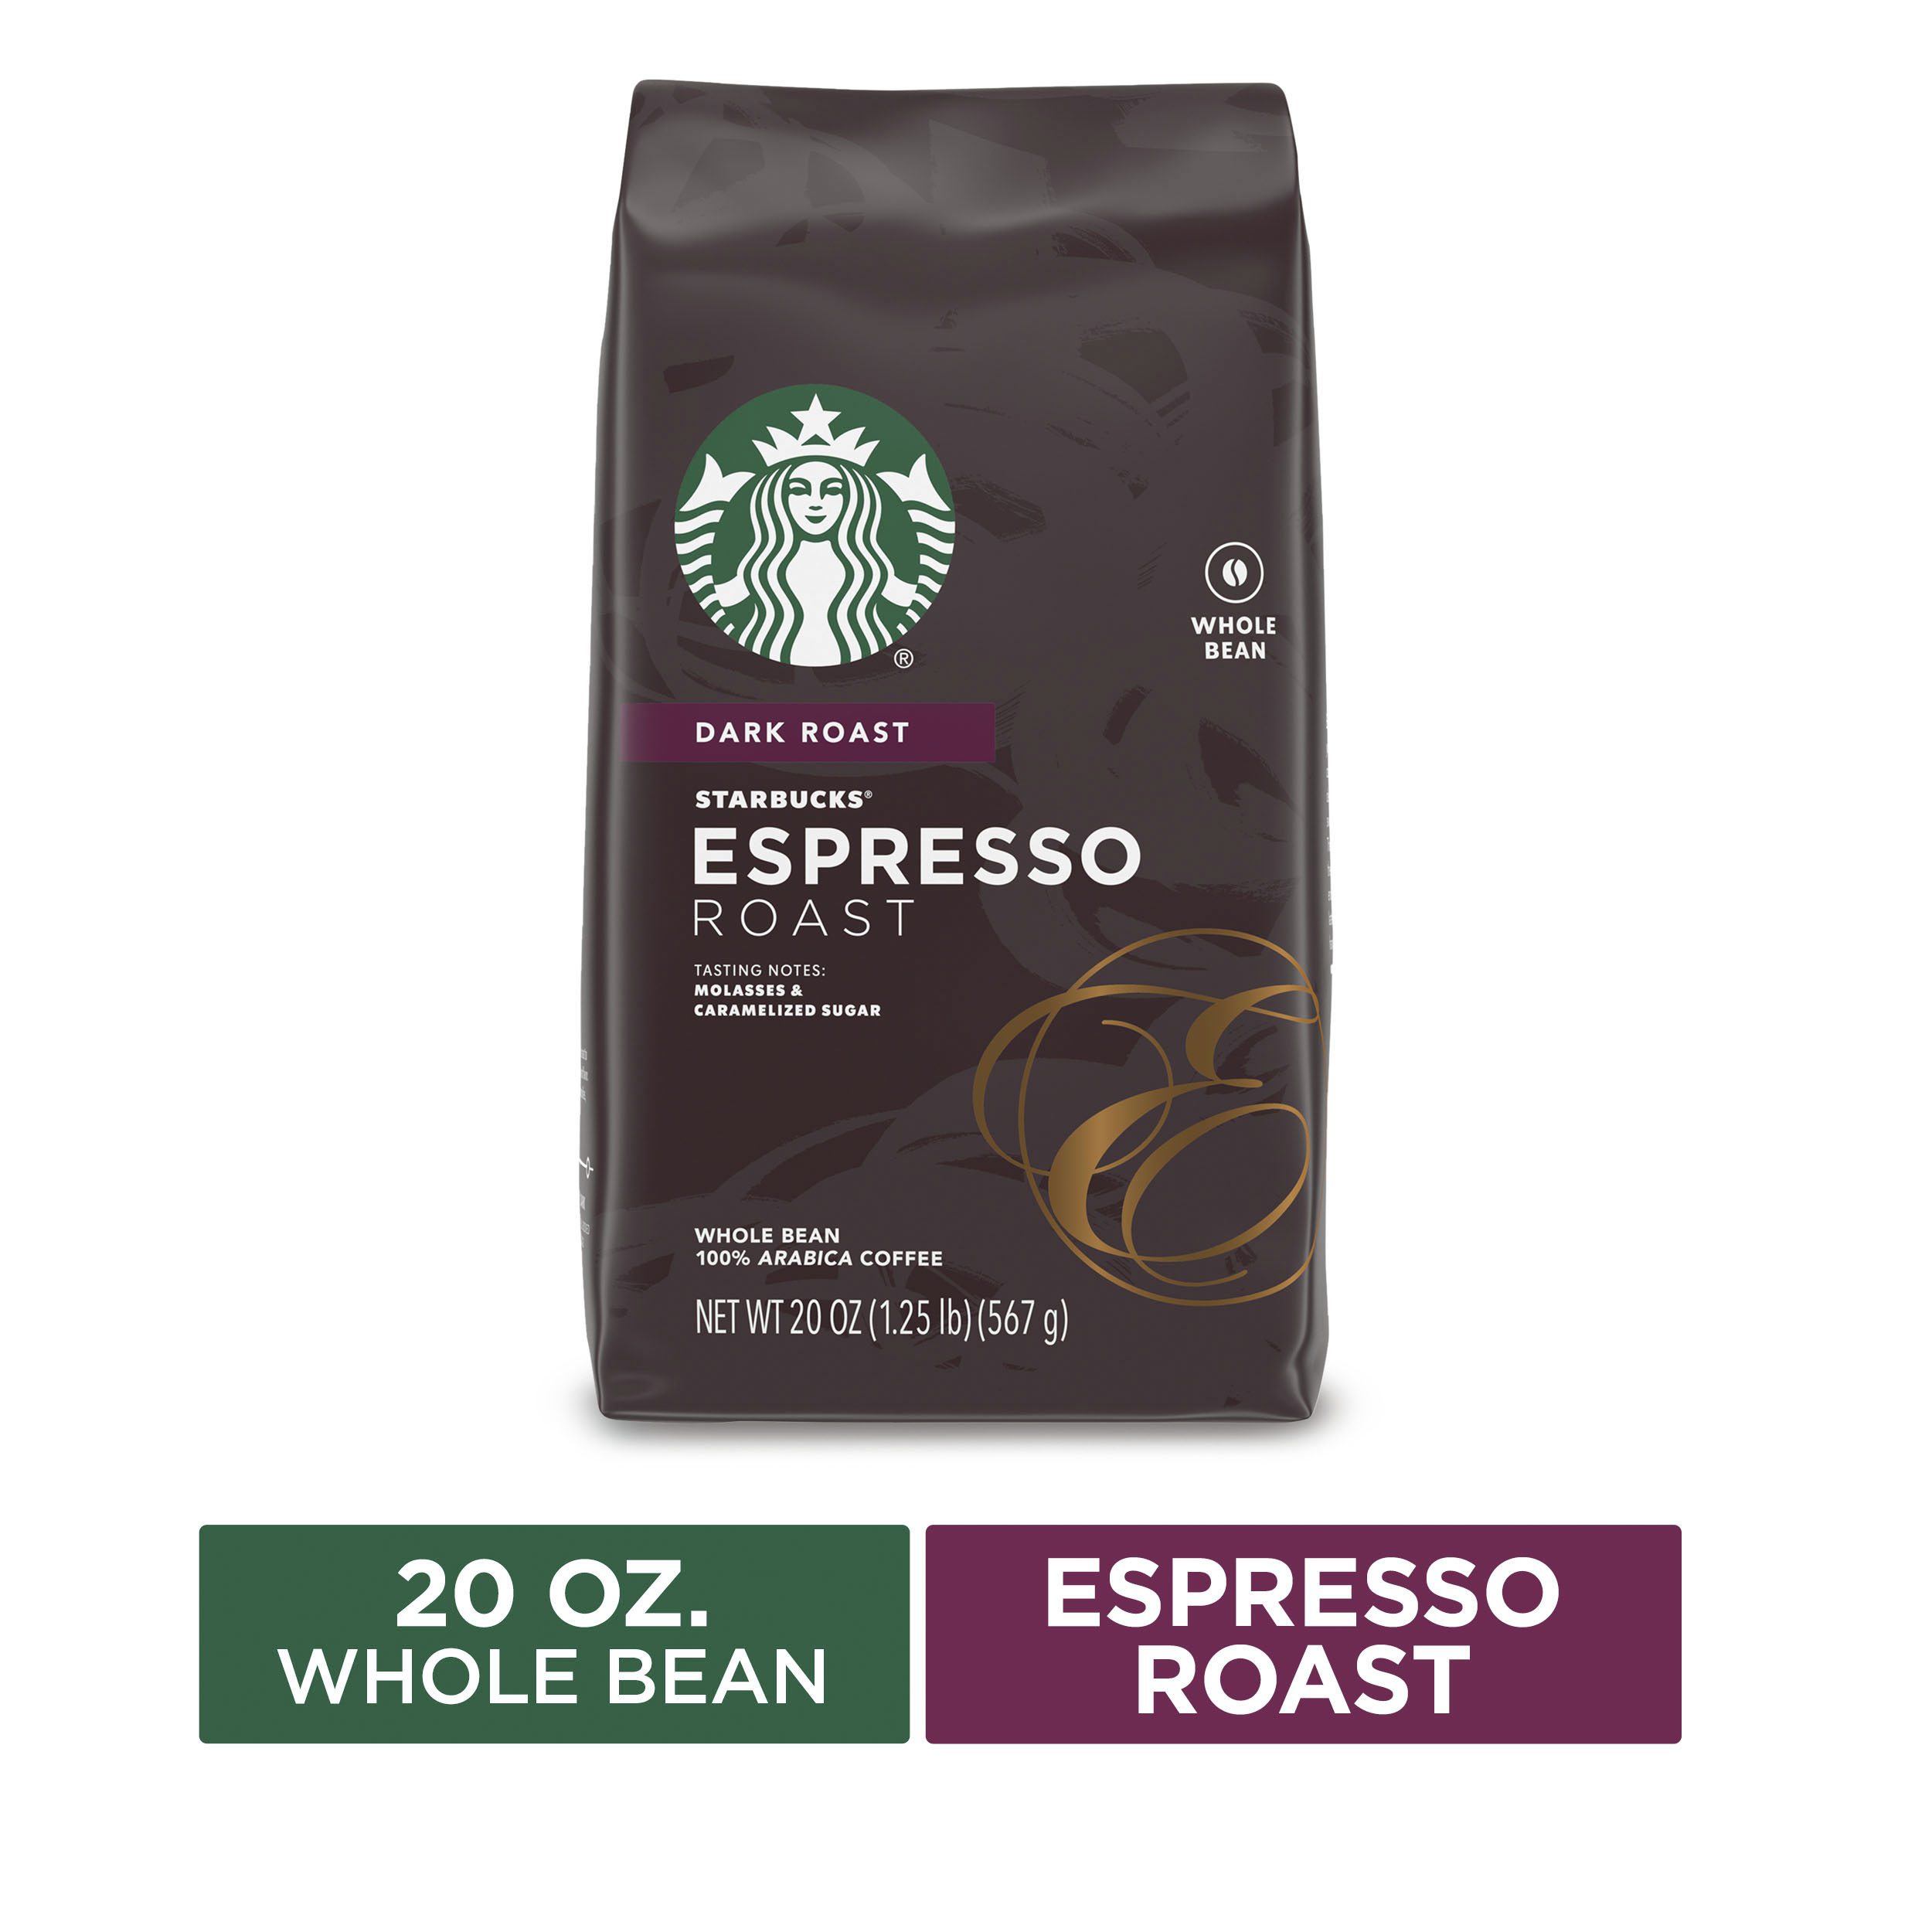 Starbucks Espresso Dark Roast Whole Bean Coffee, 20 Oz, Bag - image 1 of 6